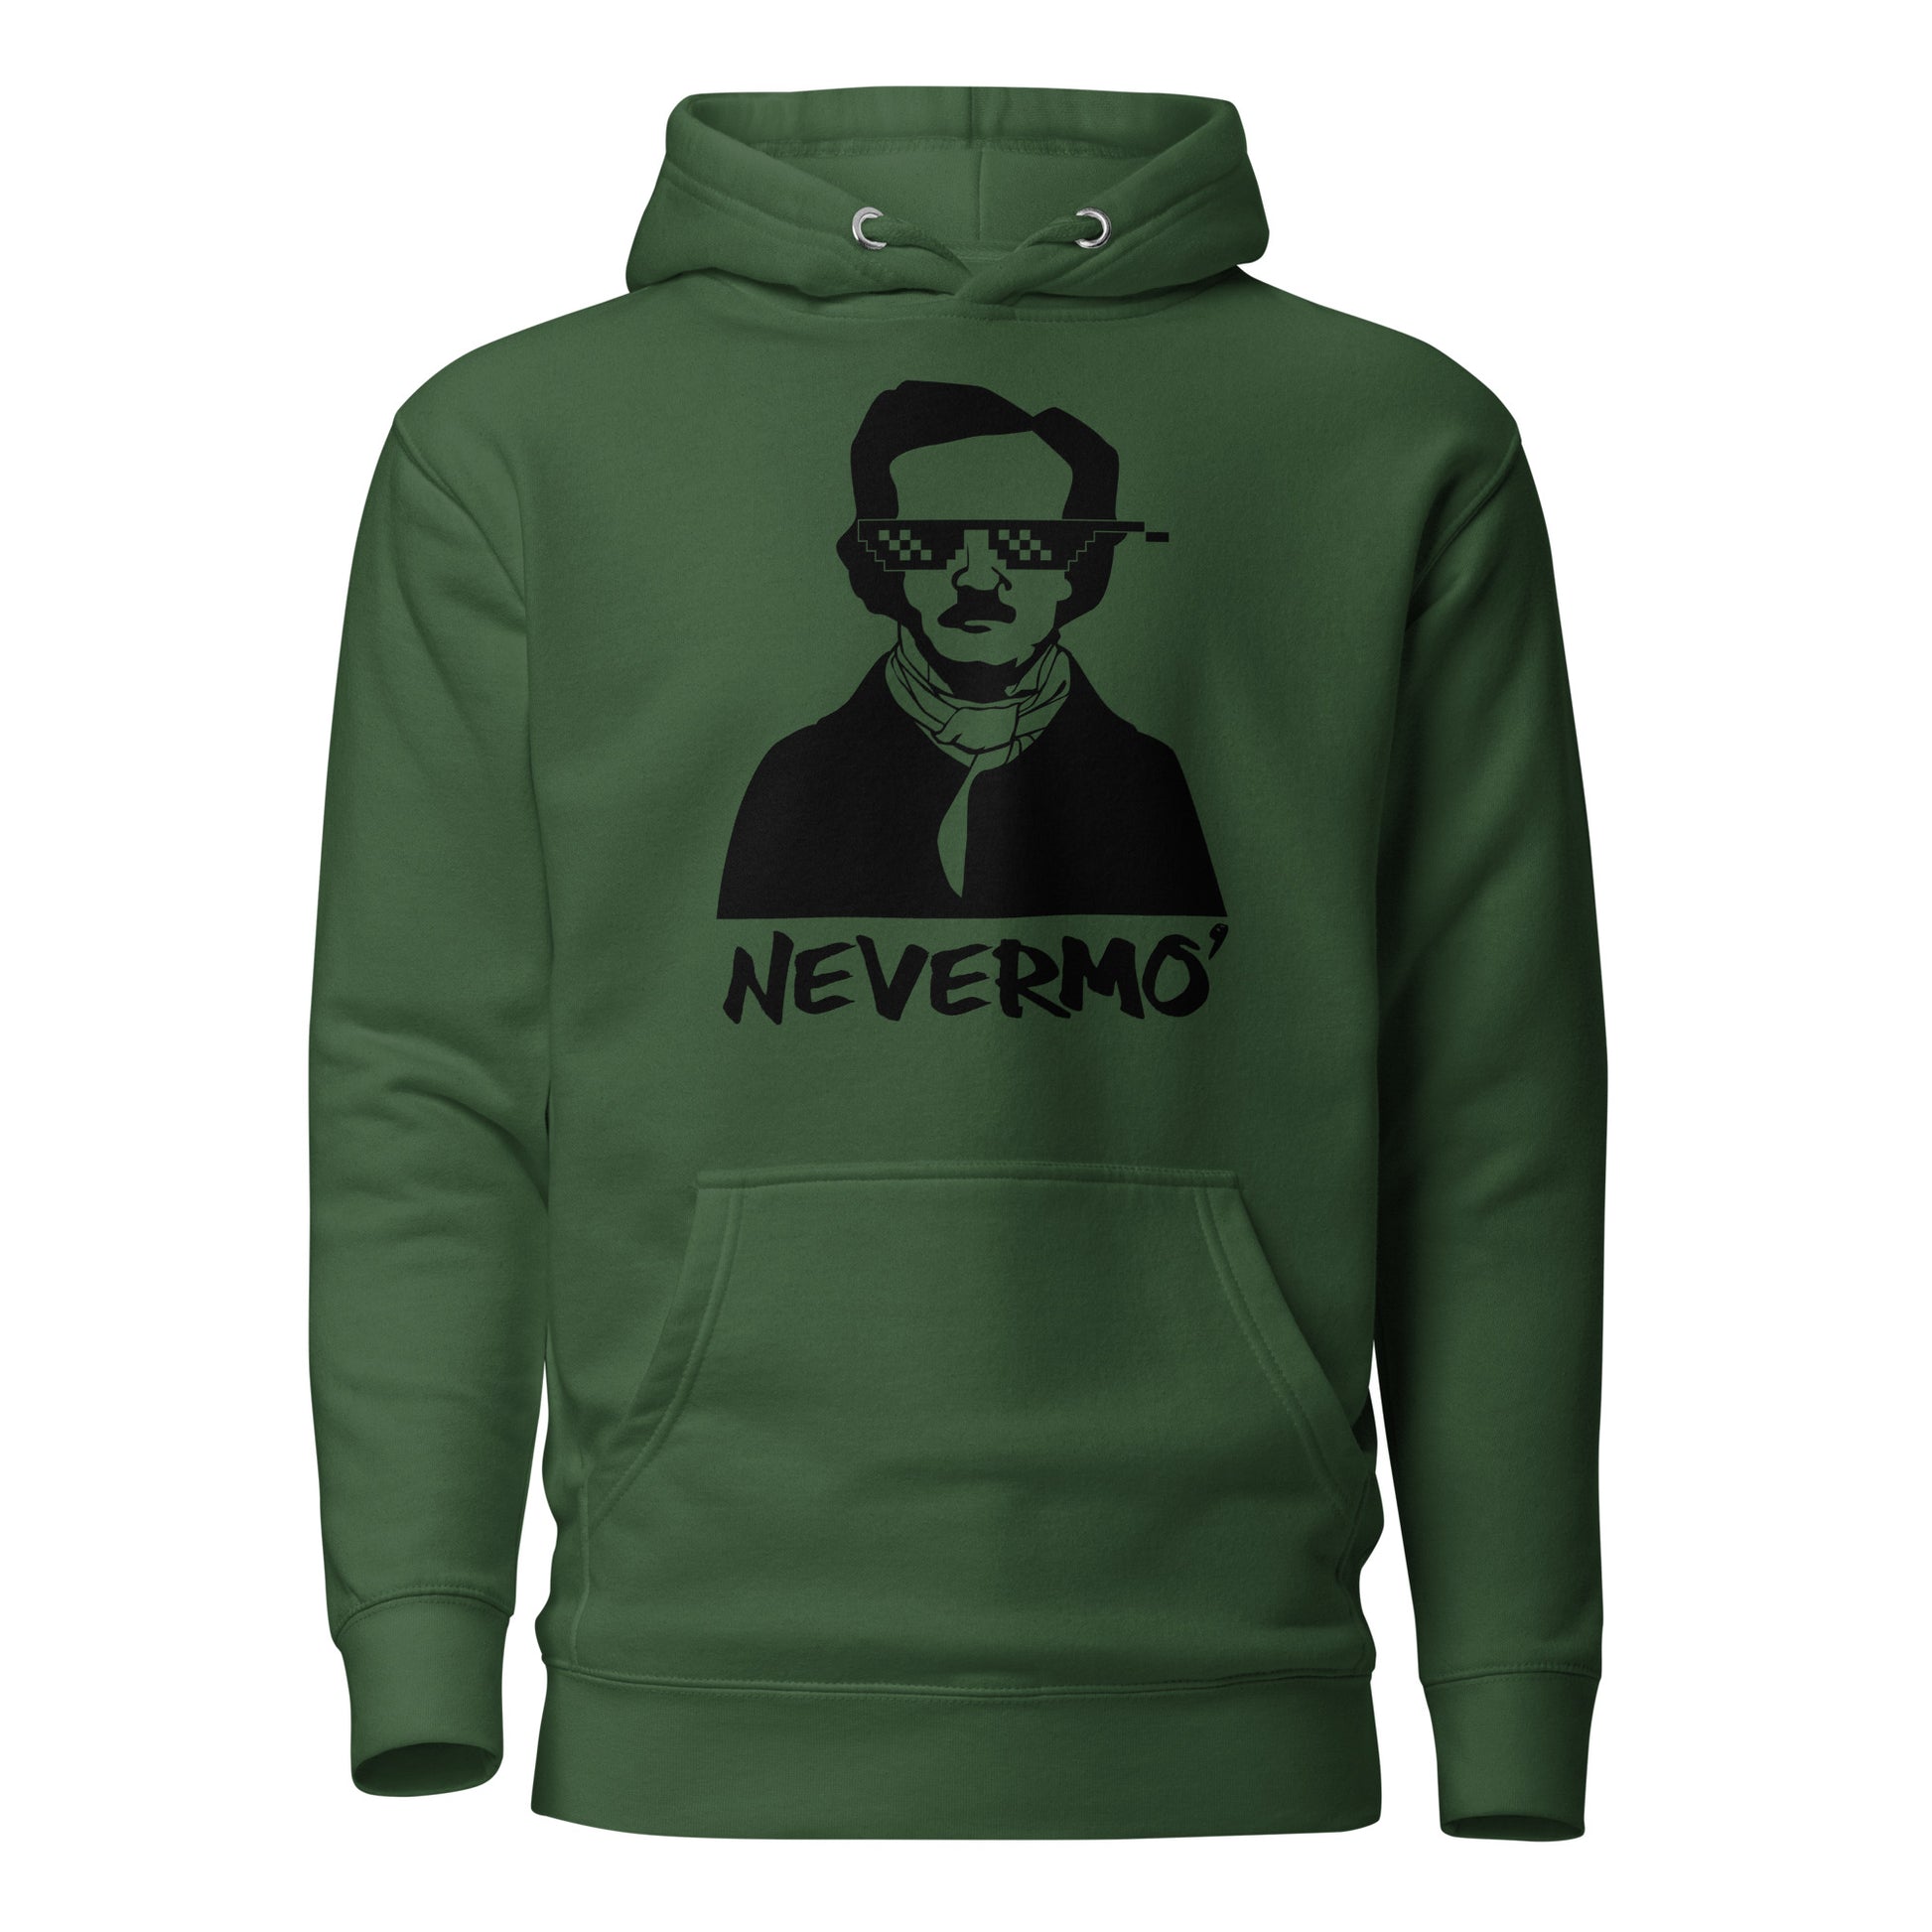 Men's Edgar Allan Poe "Nevermo" Hoodie - Forest Green Front